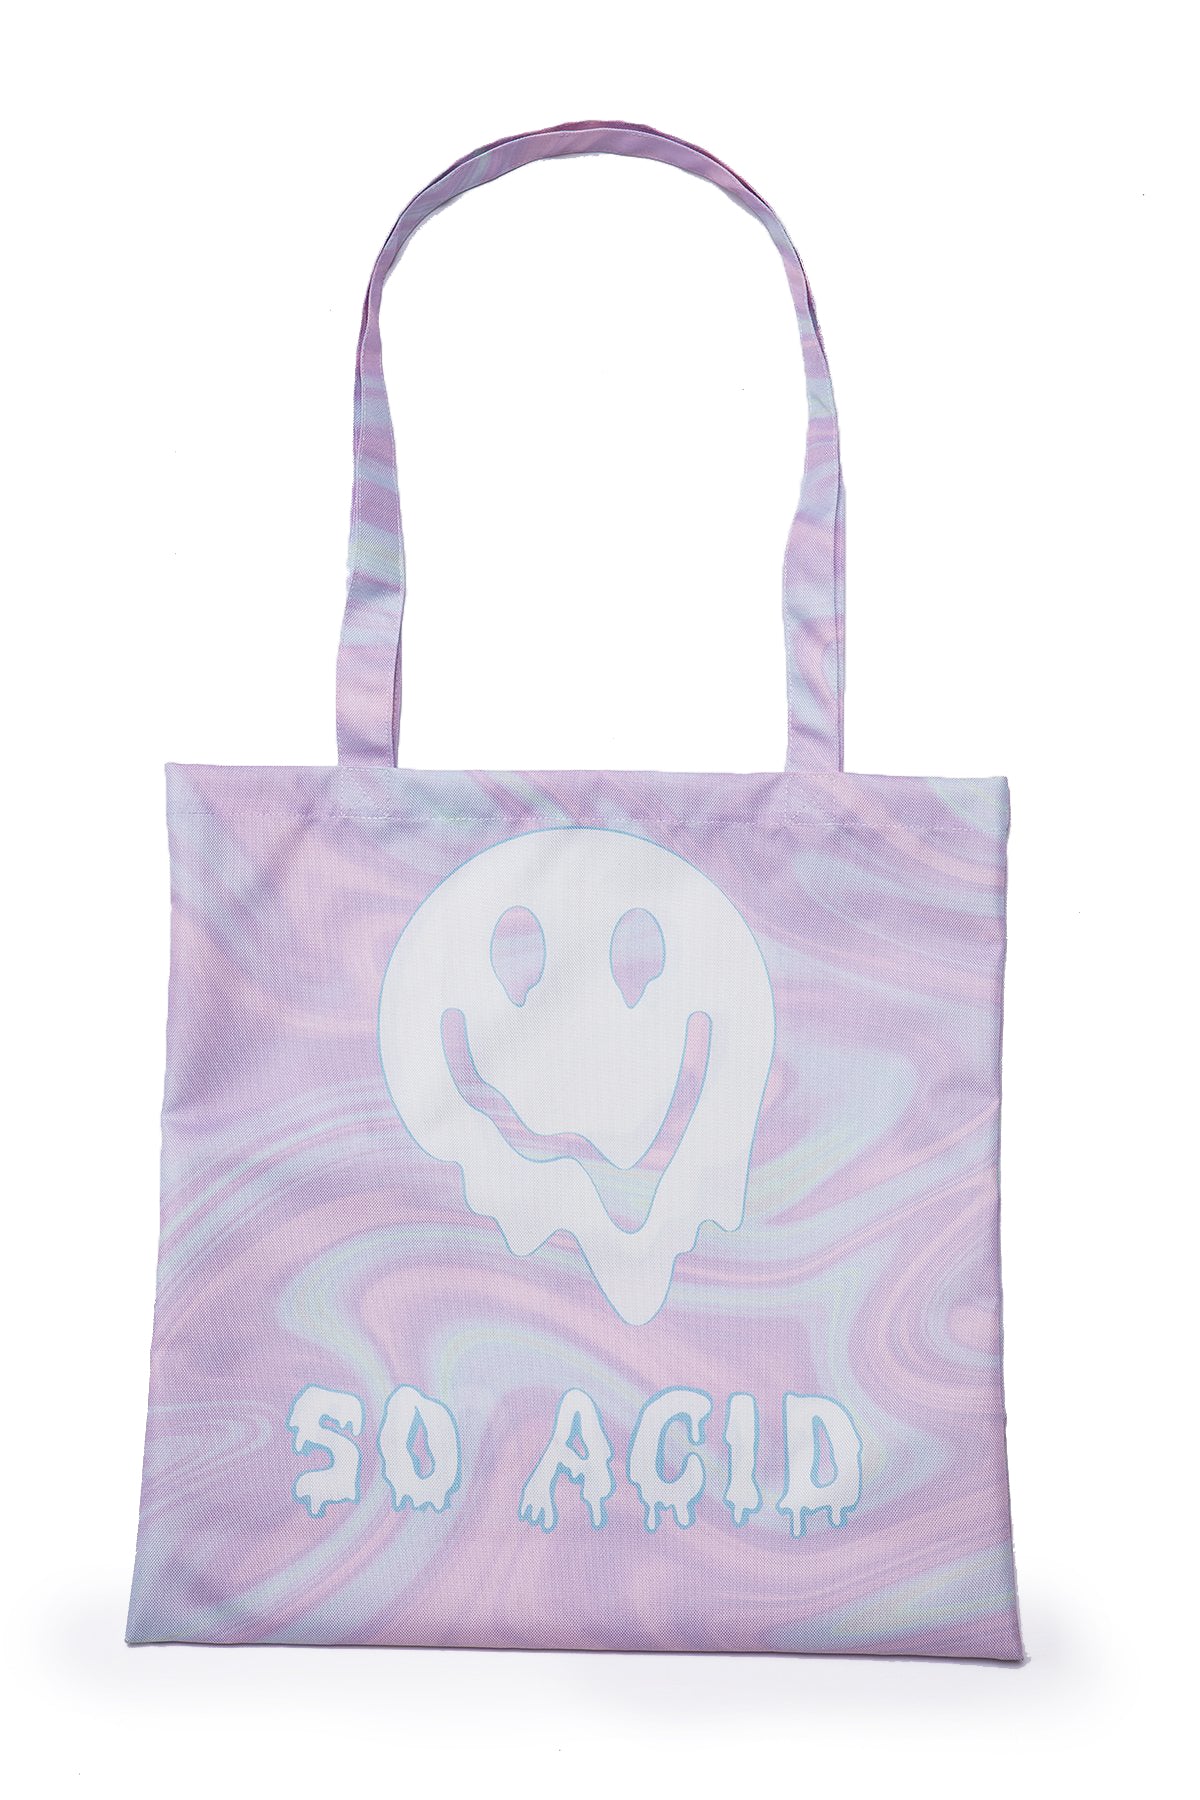 So Acid Vinyl shopping bags